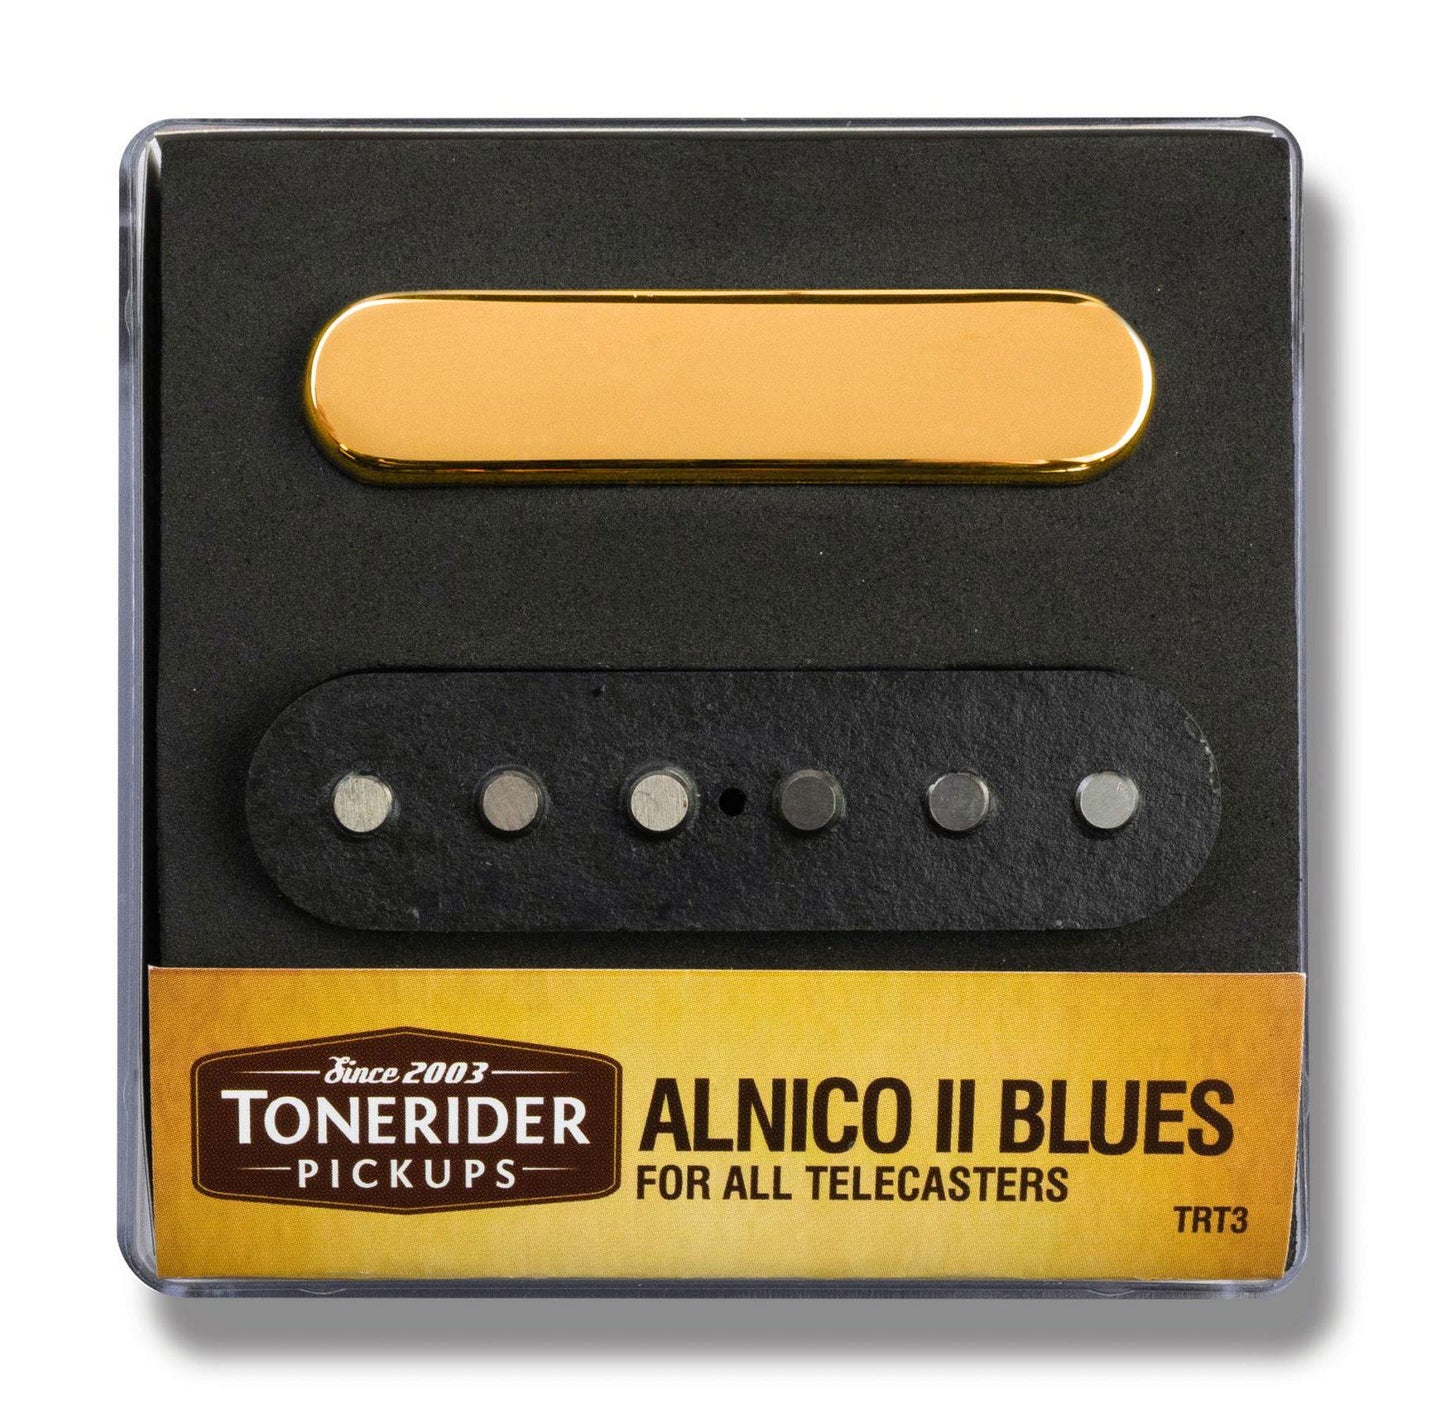 Tonerider Alnico II Blues Pickup Set for Telecaster